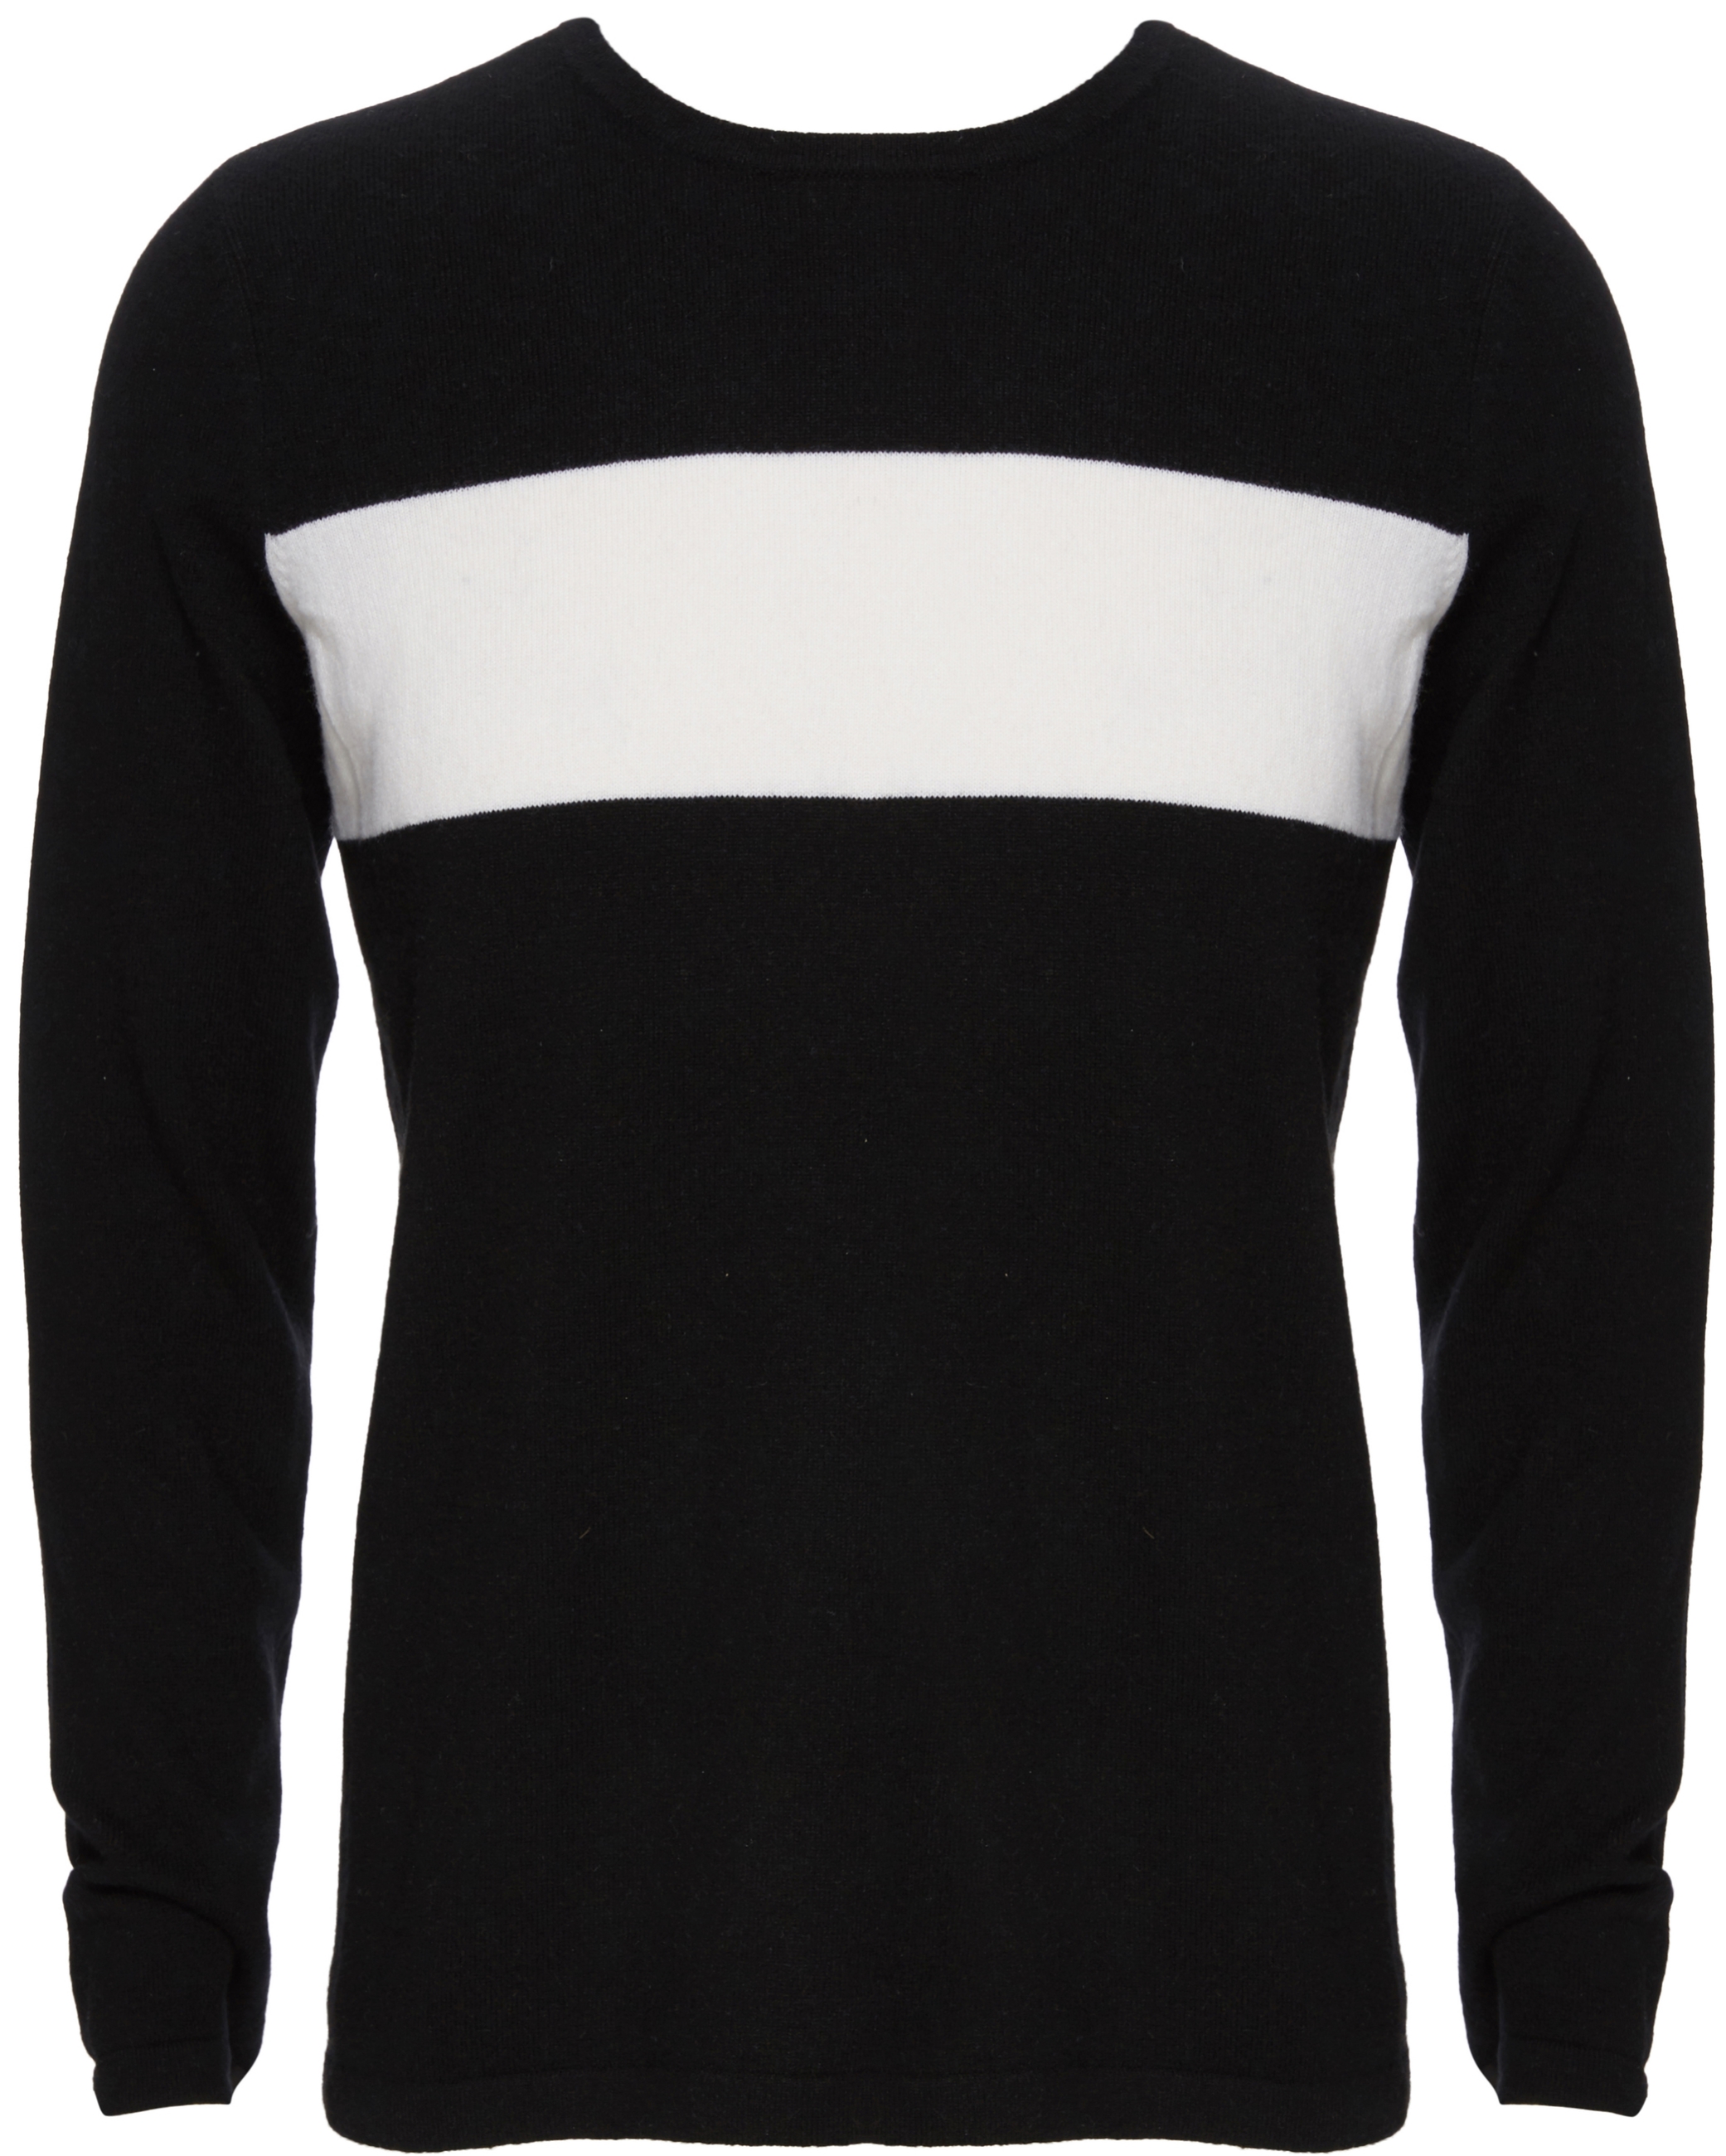 VINCE Wool Cashmere Block Stripe Crew Neck Sweater, $295